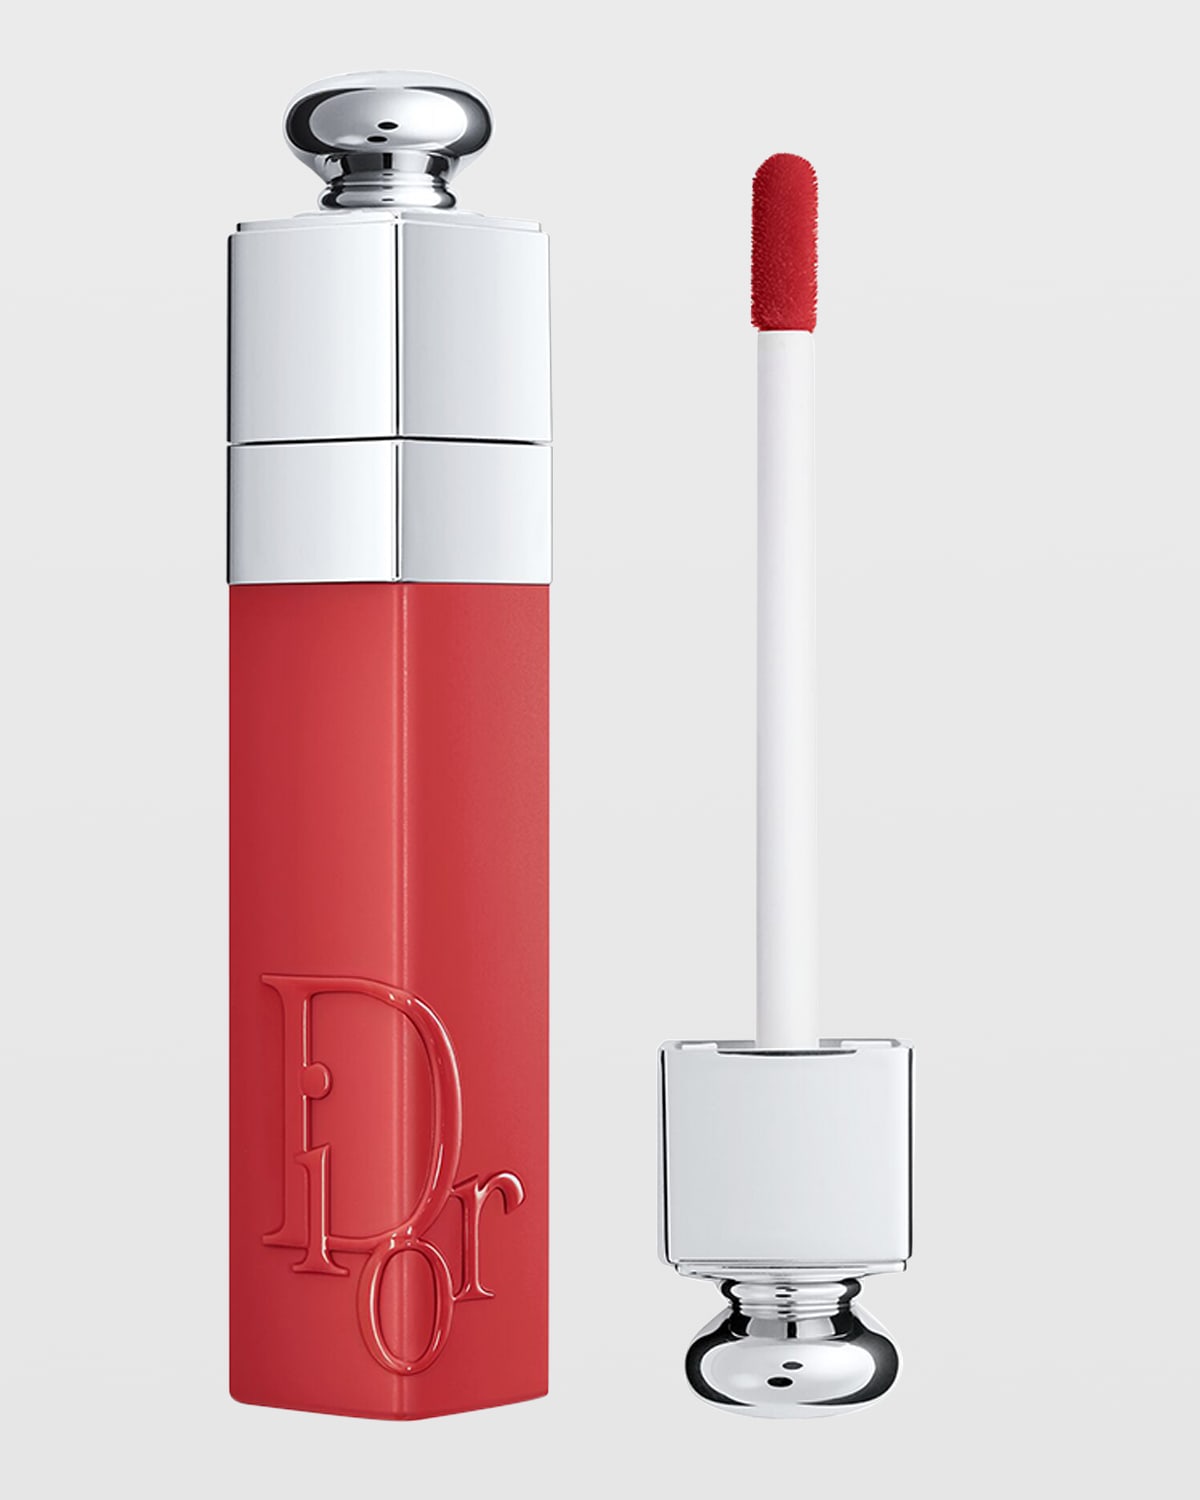 Shop Dior Addict Lip Tint In 651 Natural Rose